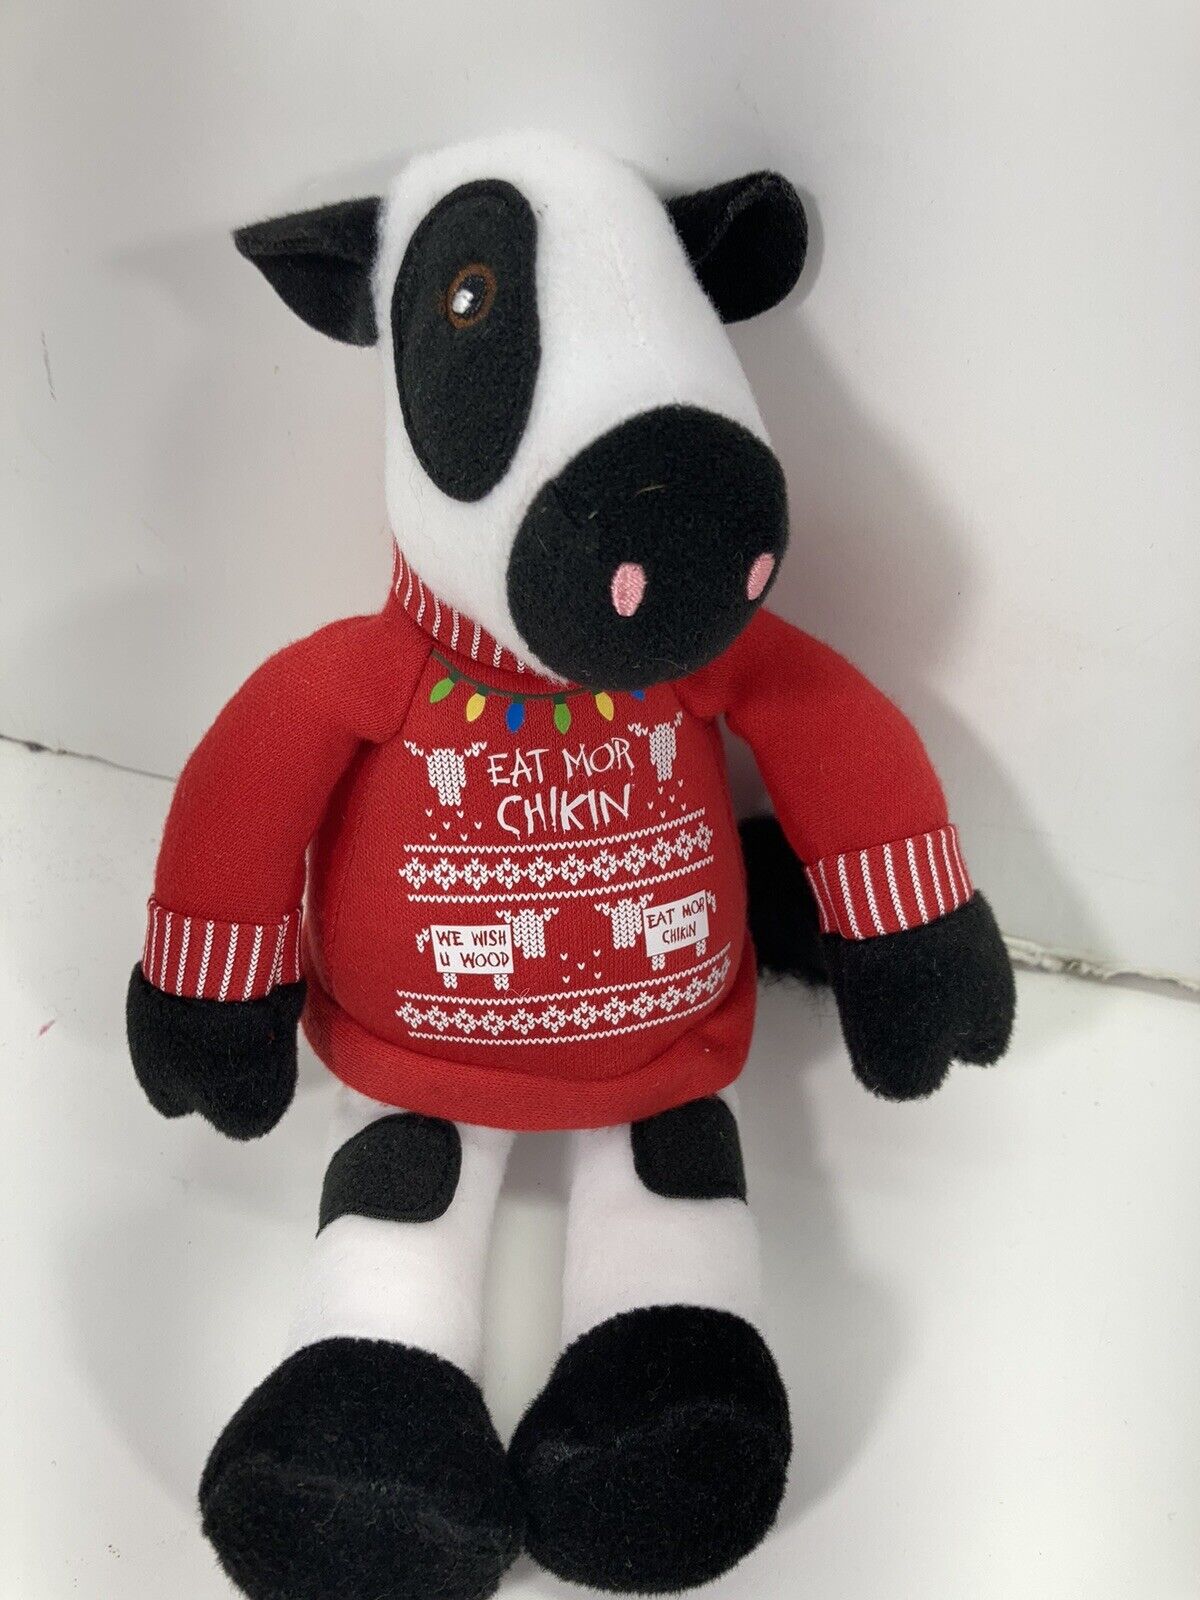 Chick-fil-A Cow Plush Christmas Sweater We Wish U Wood Eat Mor Chikin 2018 Small